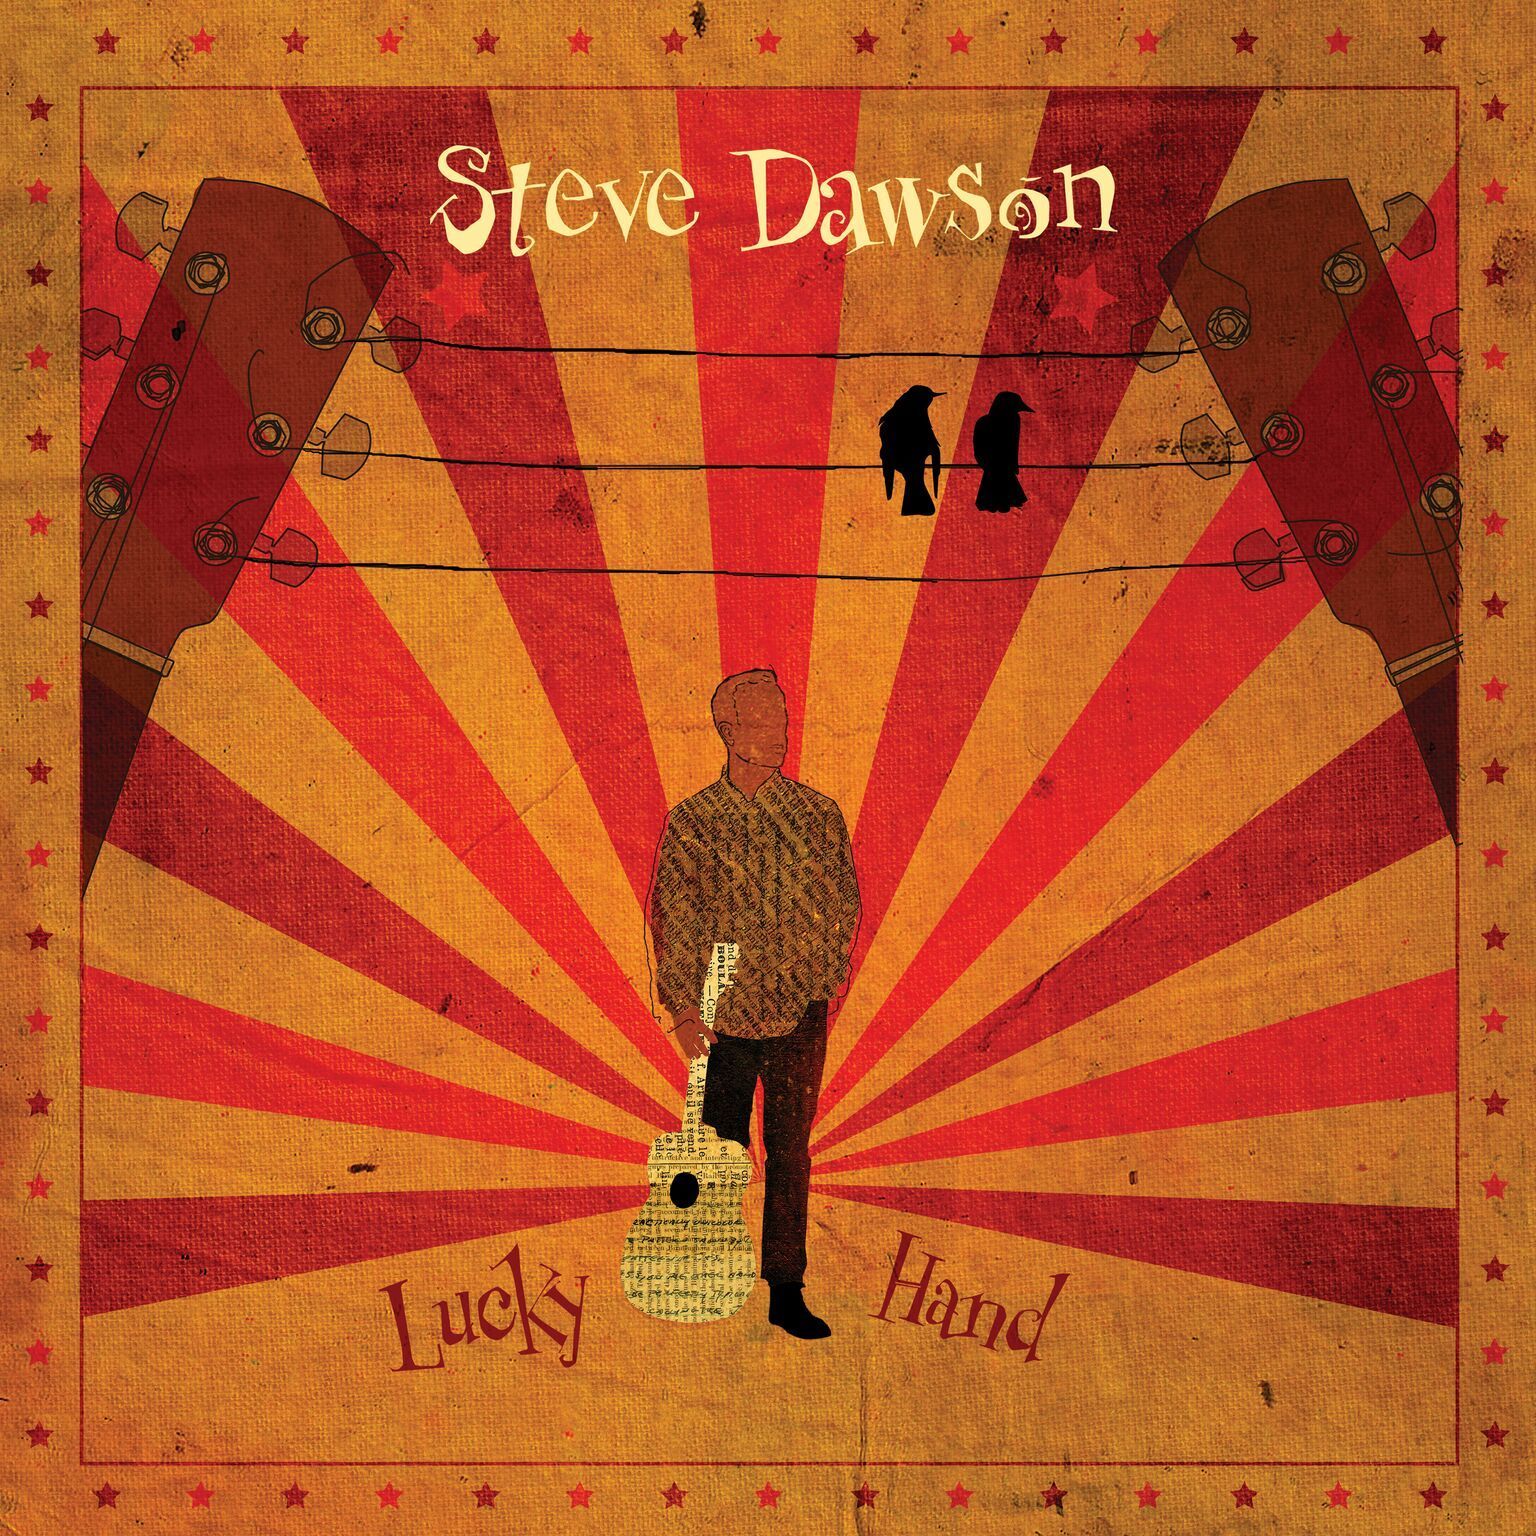 Dawson, Steve - Lucky Hand (LP)